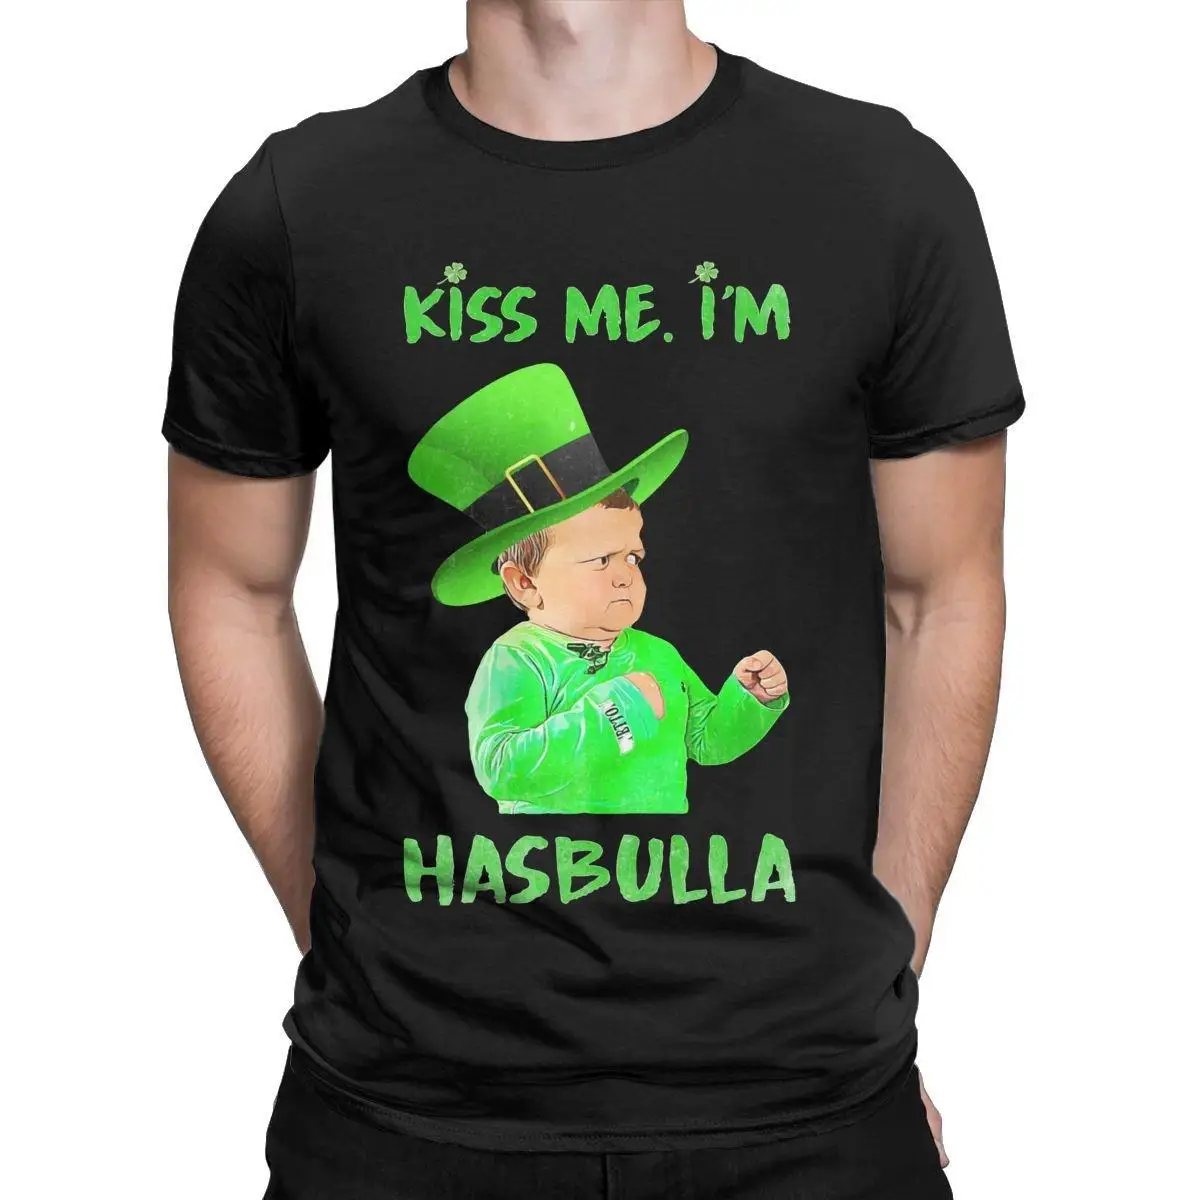 I'm Hasbulla Happy St Patricks Day T Shirt Men's Cotton Funny T-Shirts O Neck Tees Short Sleeve Tops New Arrival